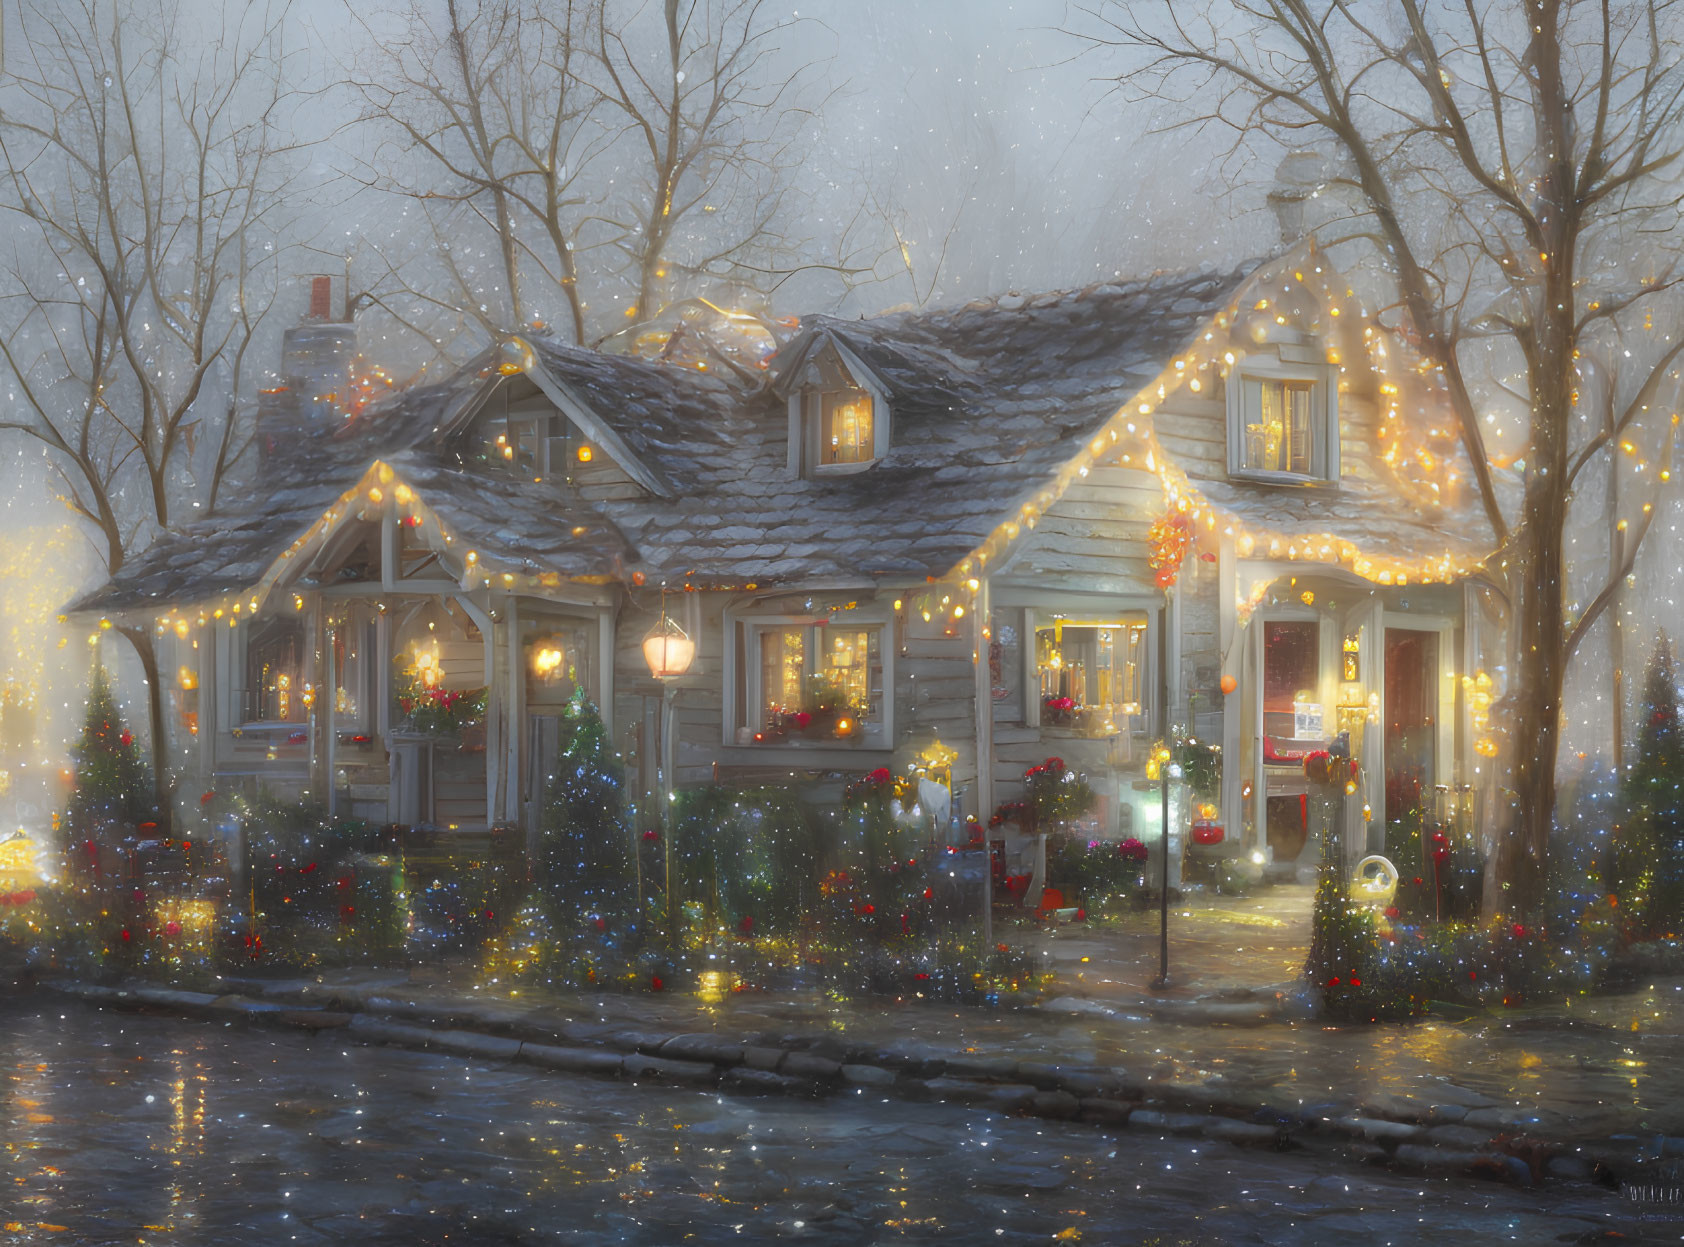 Festive Christmas lights decorate cozy illuminated house